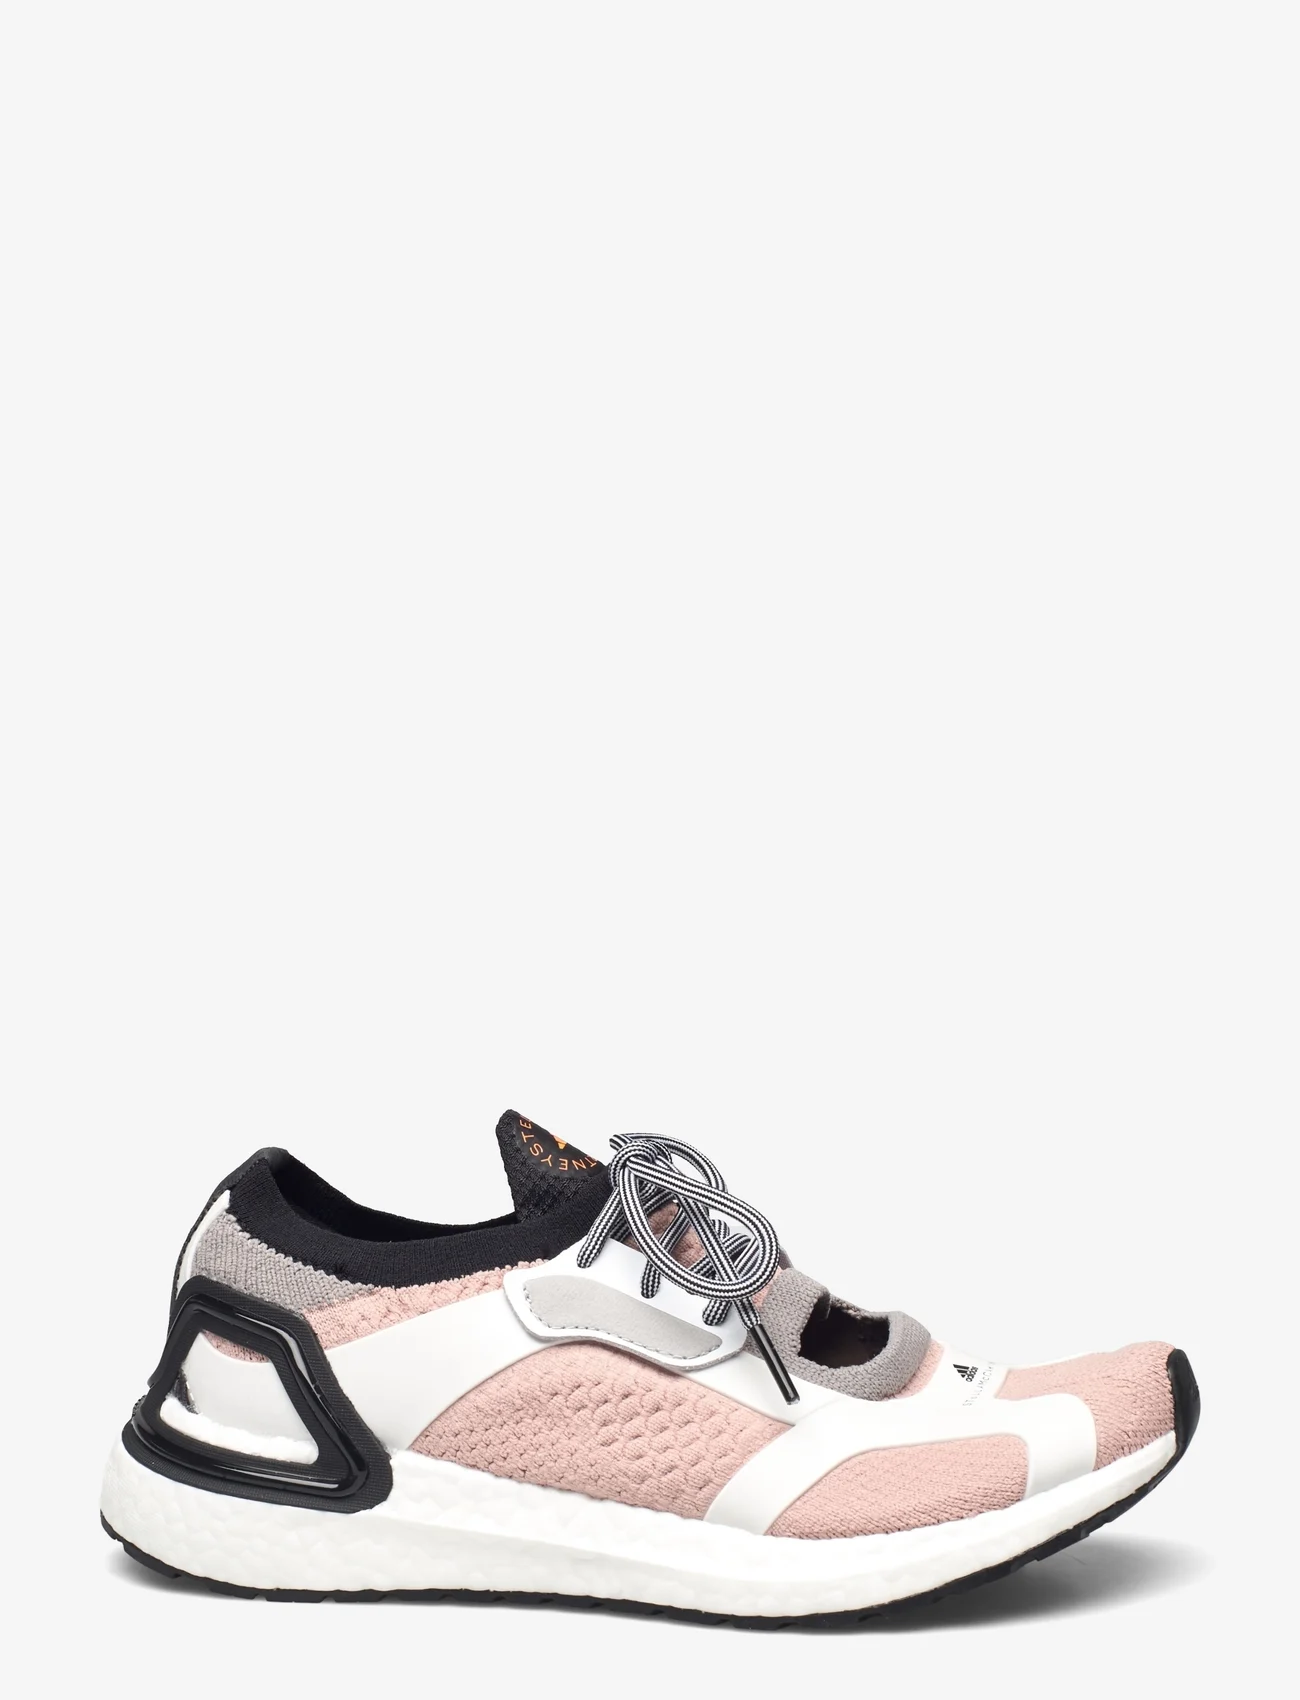 adidas by Stella McCartney Asmc Ultraboost Sandal - Training shoes |  